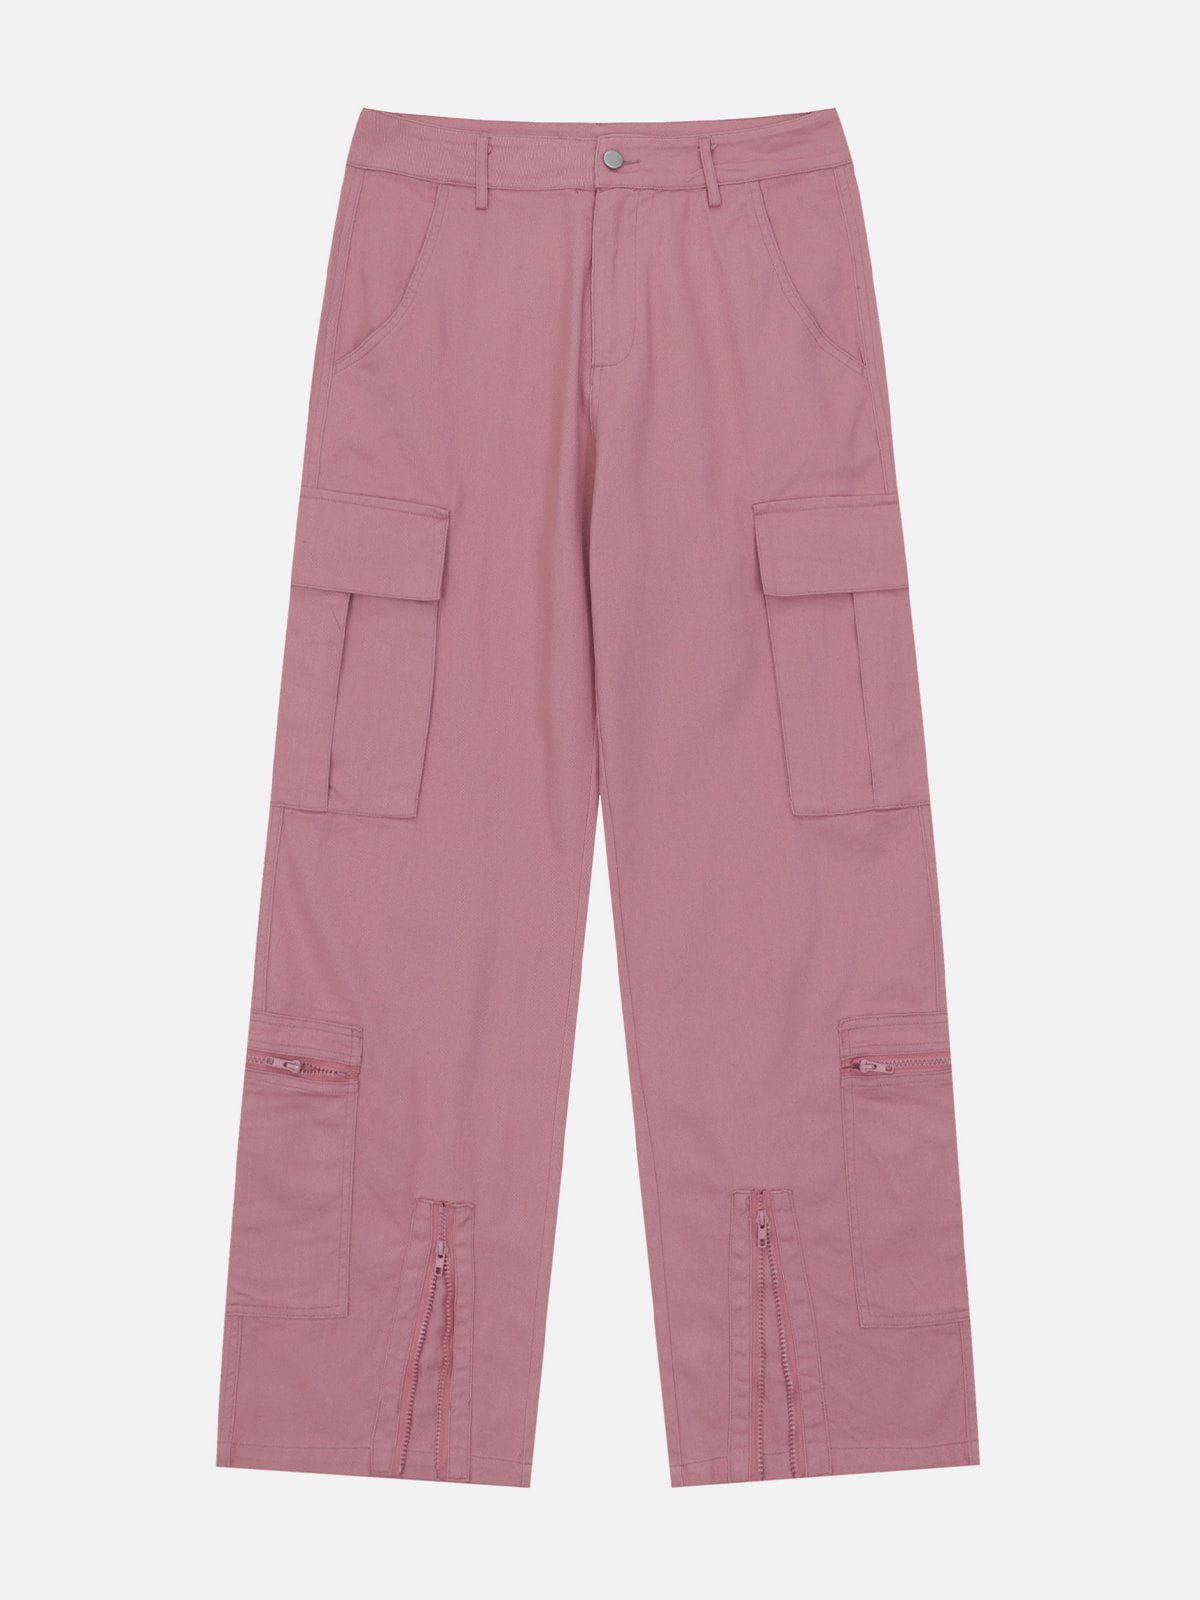 Eprezzy® - Multi-Pocket Split Pants Streetwear Fashion - eprezzy.com